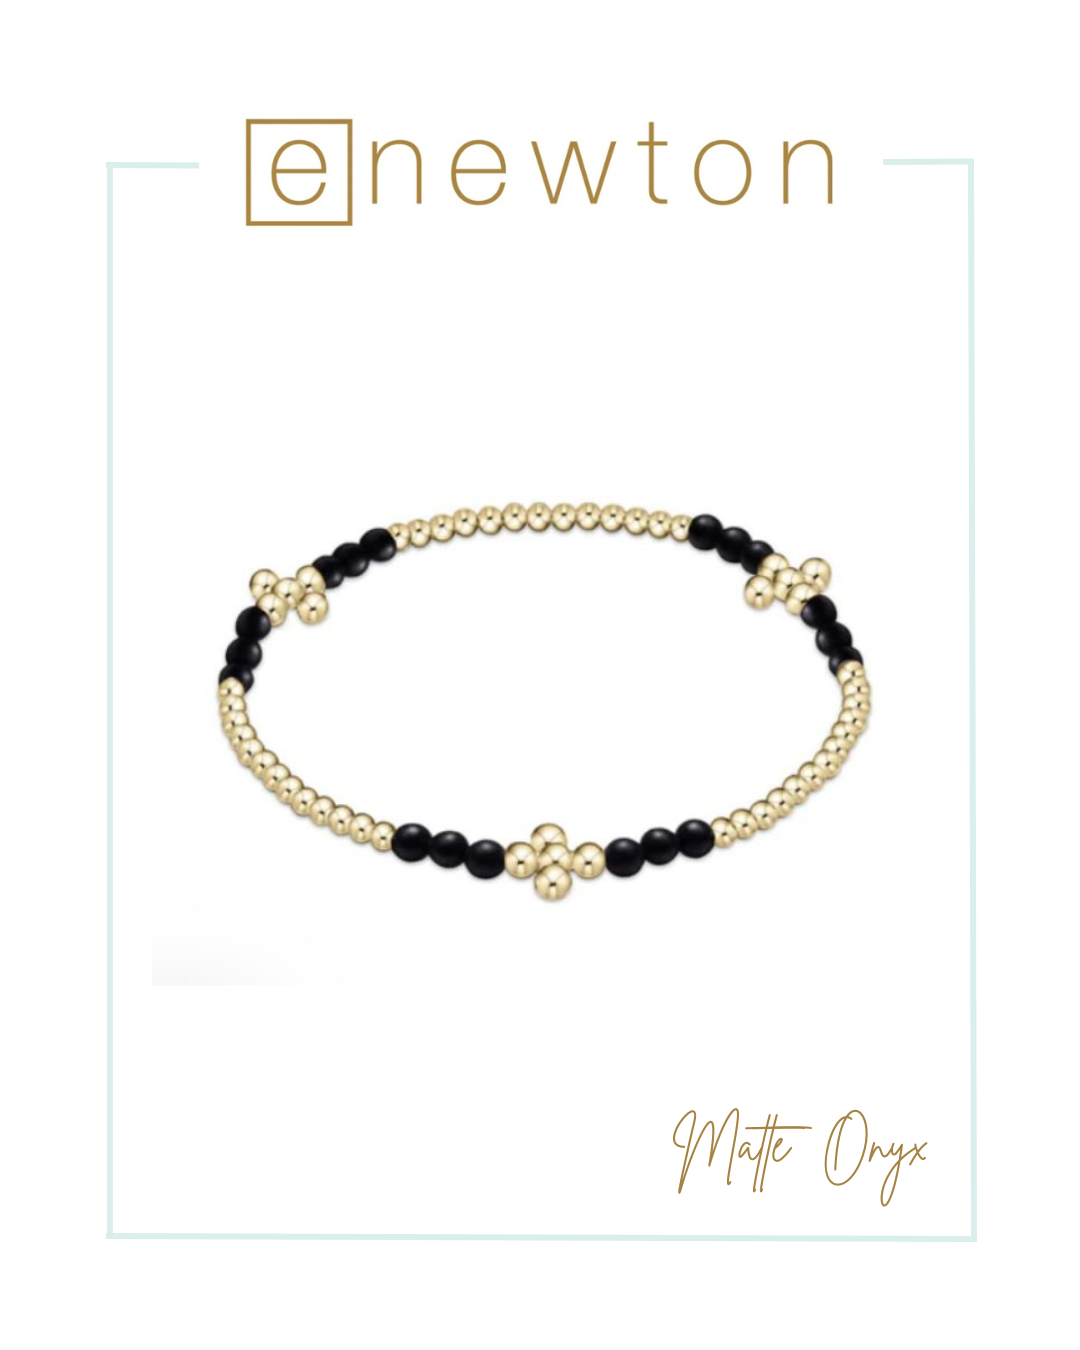 E Newton Signature Cross Gold Bliss Pattern 2.5mm Bead Bracelet - Matte Onyx-Bracelets-ENEWTON-The Village Shoppe, Women’s Fashion Boutique, Shop Online and In Store - Located in Muscle Shoals, AL.